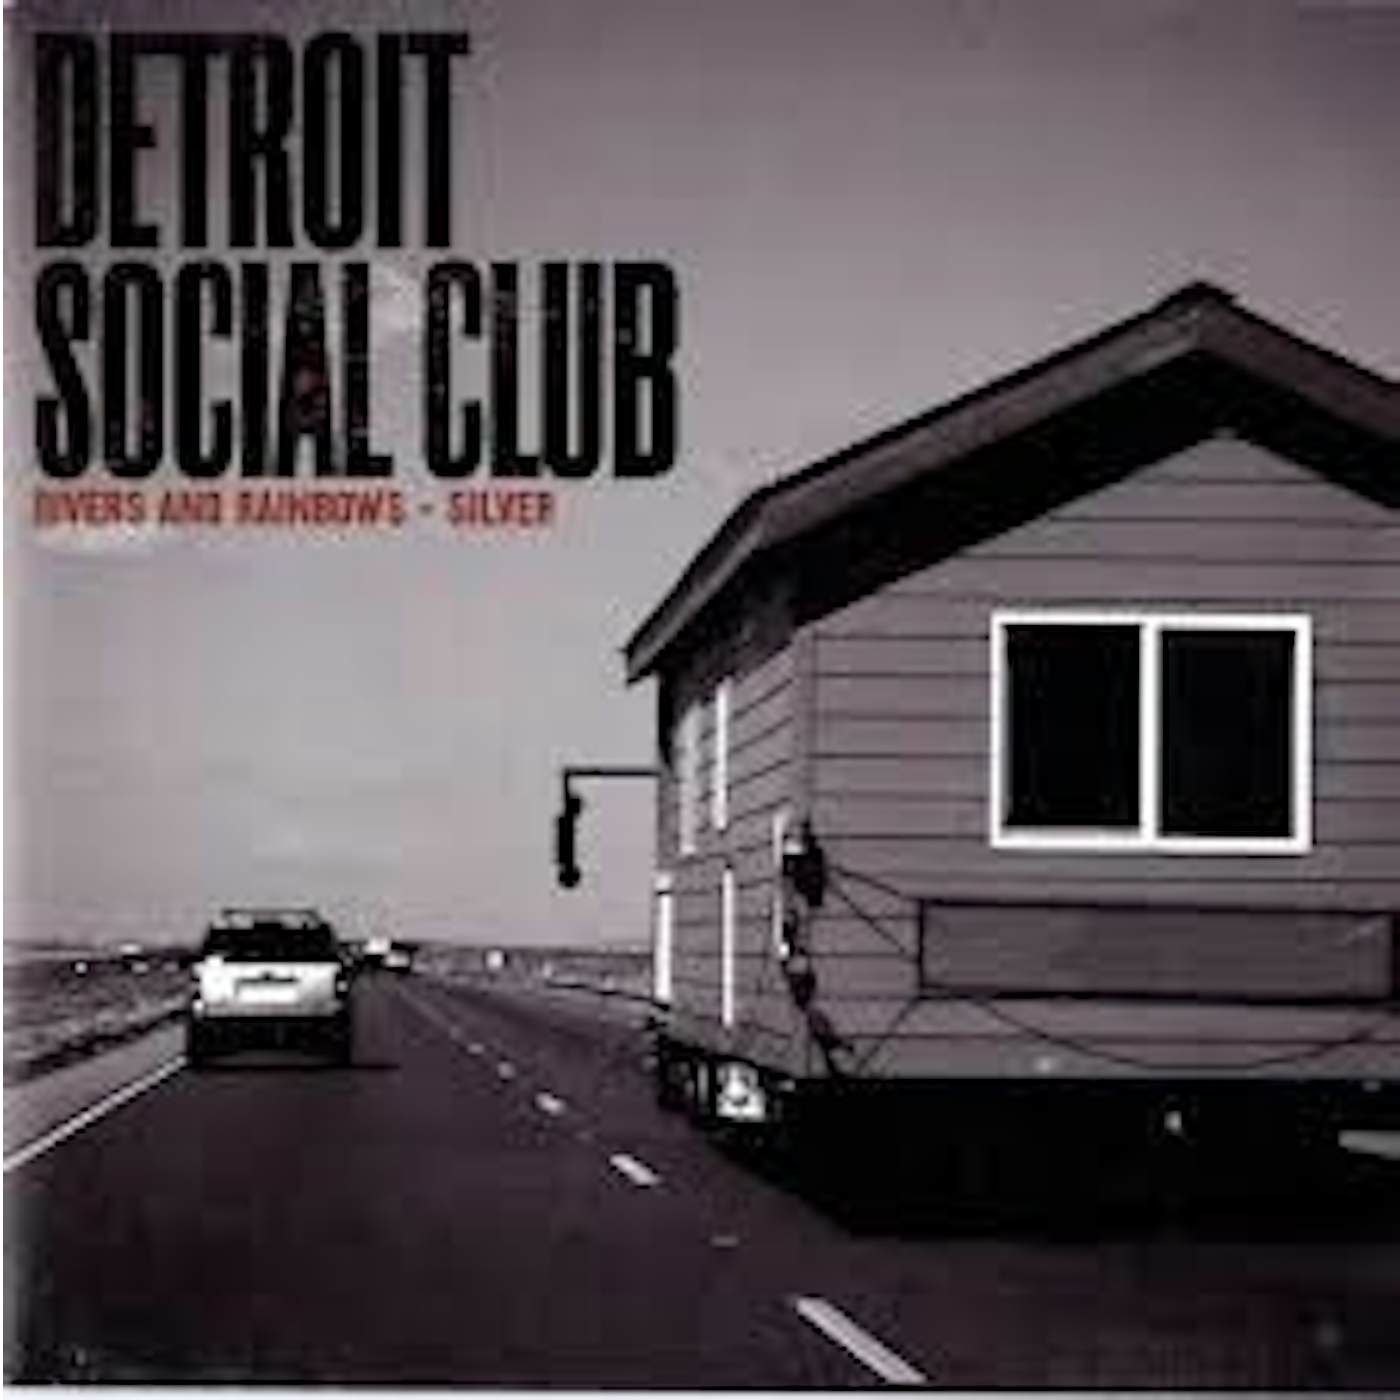 Detroit Social Club RIVERS & RAINBOWS/SILVER Vinyl Record